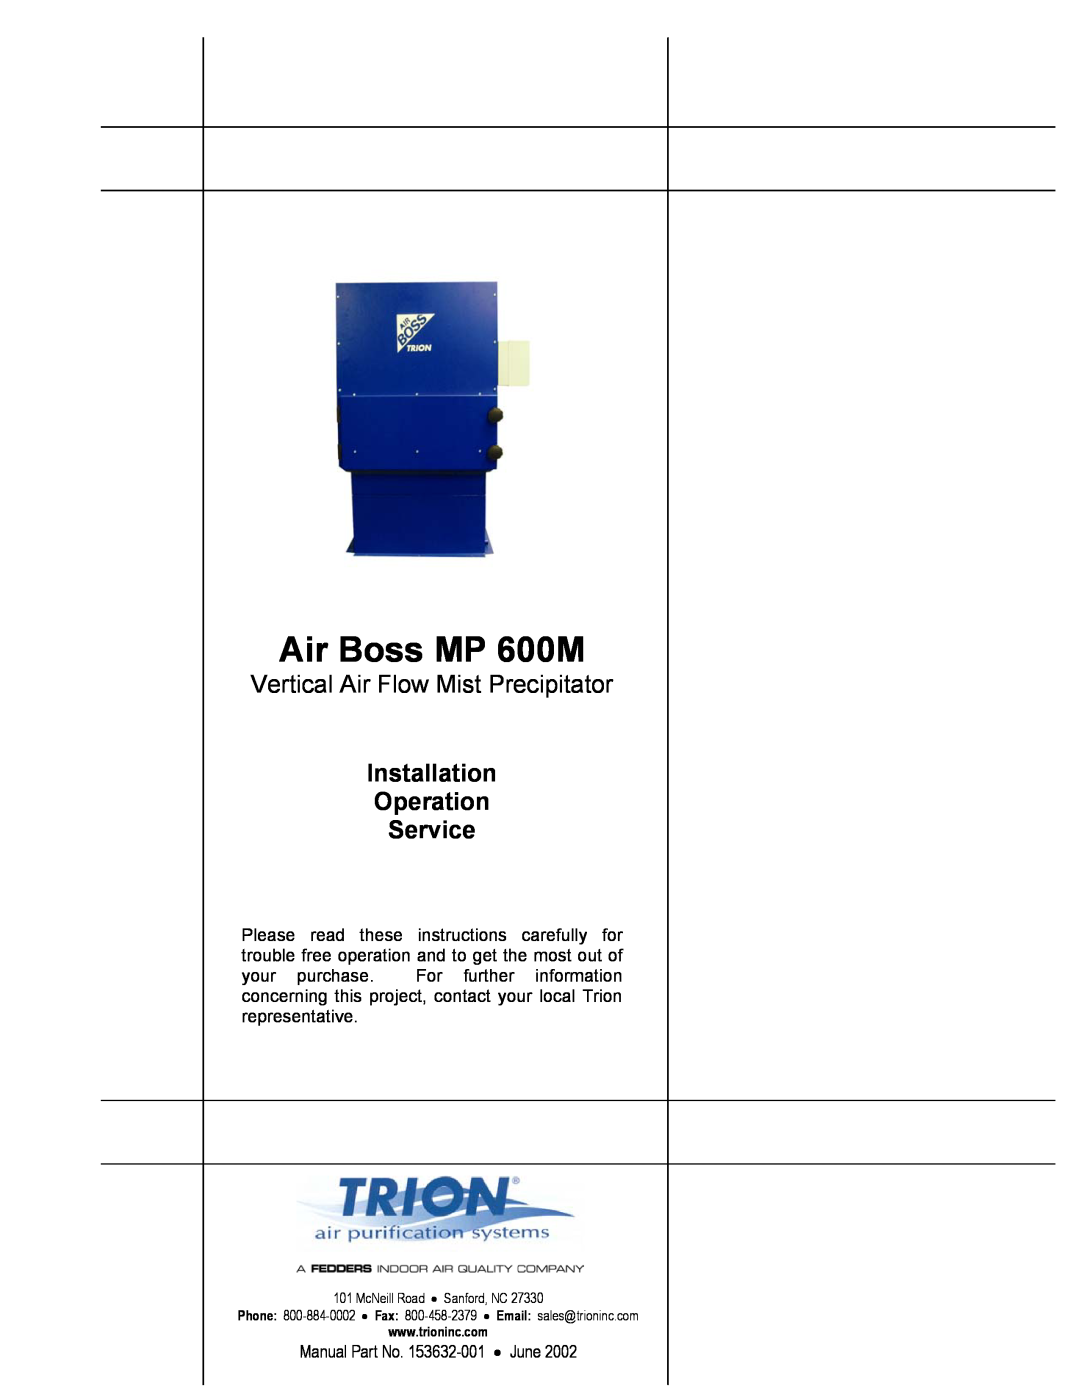 Trion manual Air Boss MP 600M, Vertical Air Flow Mist Precipitator, Installation Operation Service 